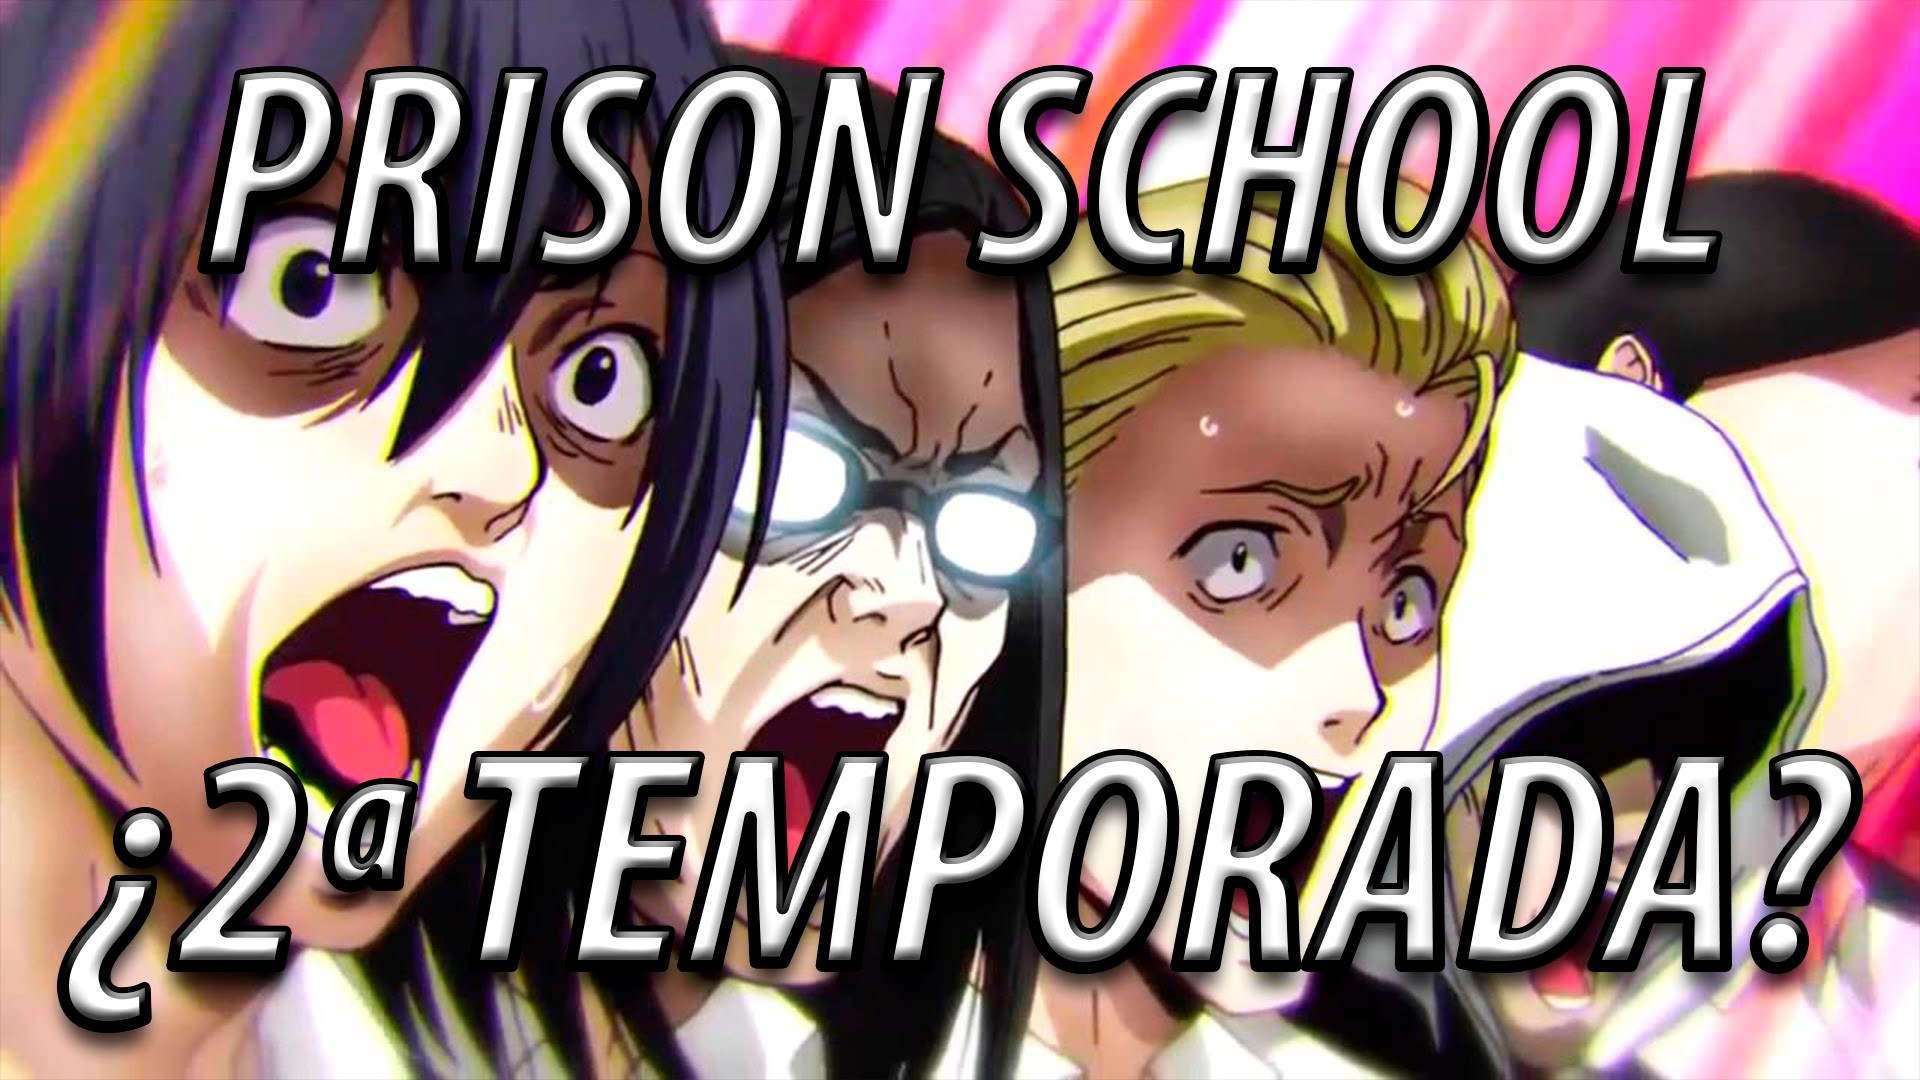 Vai ter 2ª temporada de Danmachi, Prison School 2